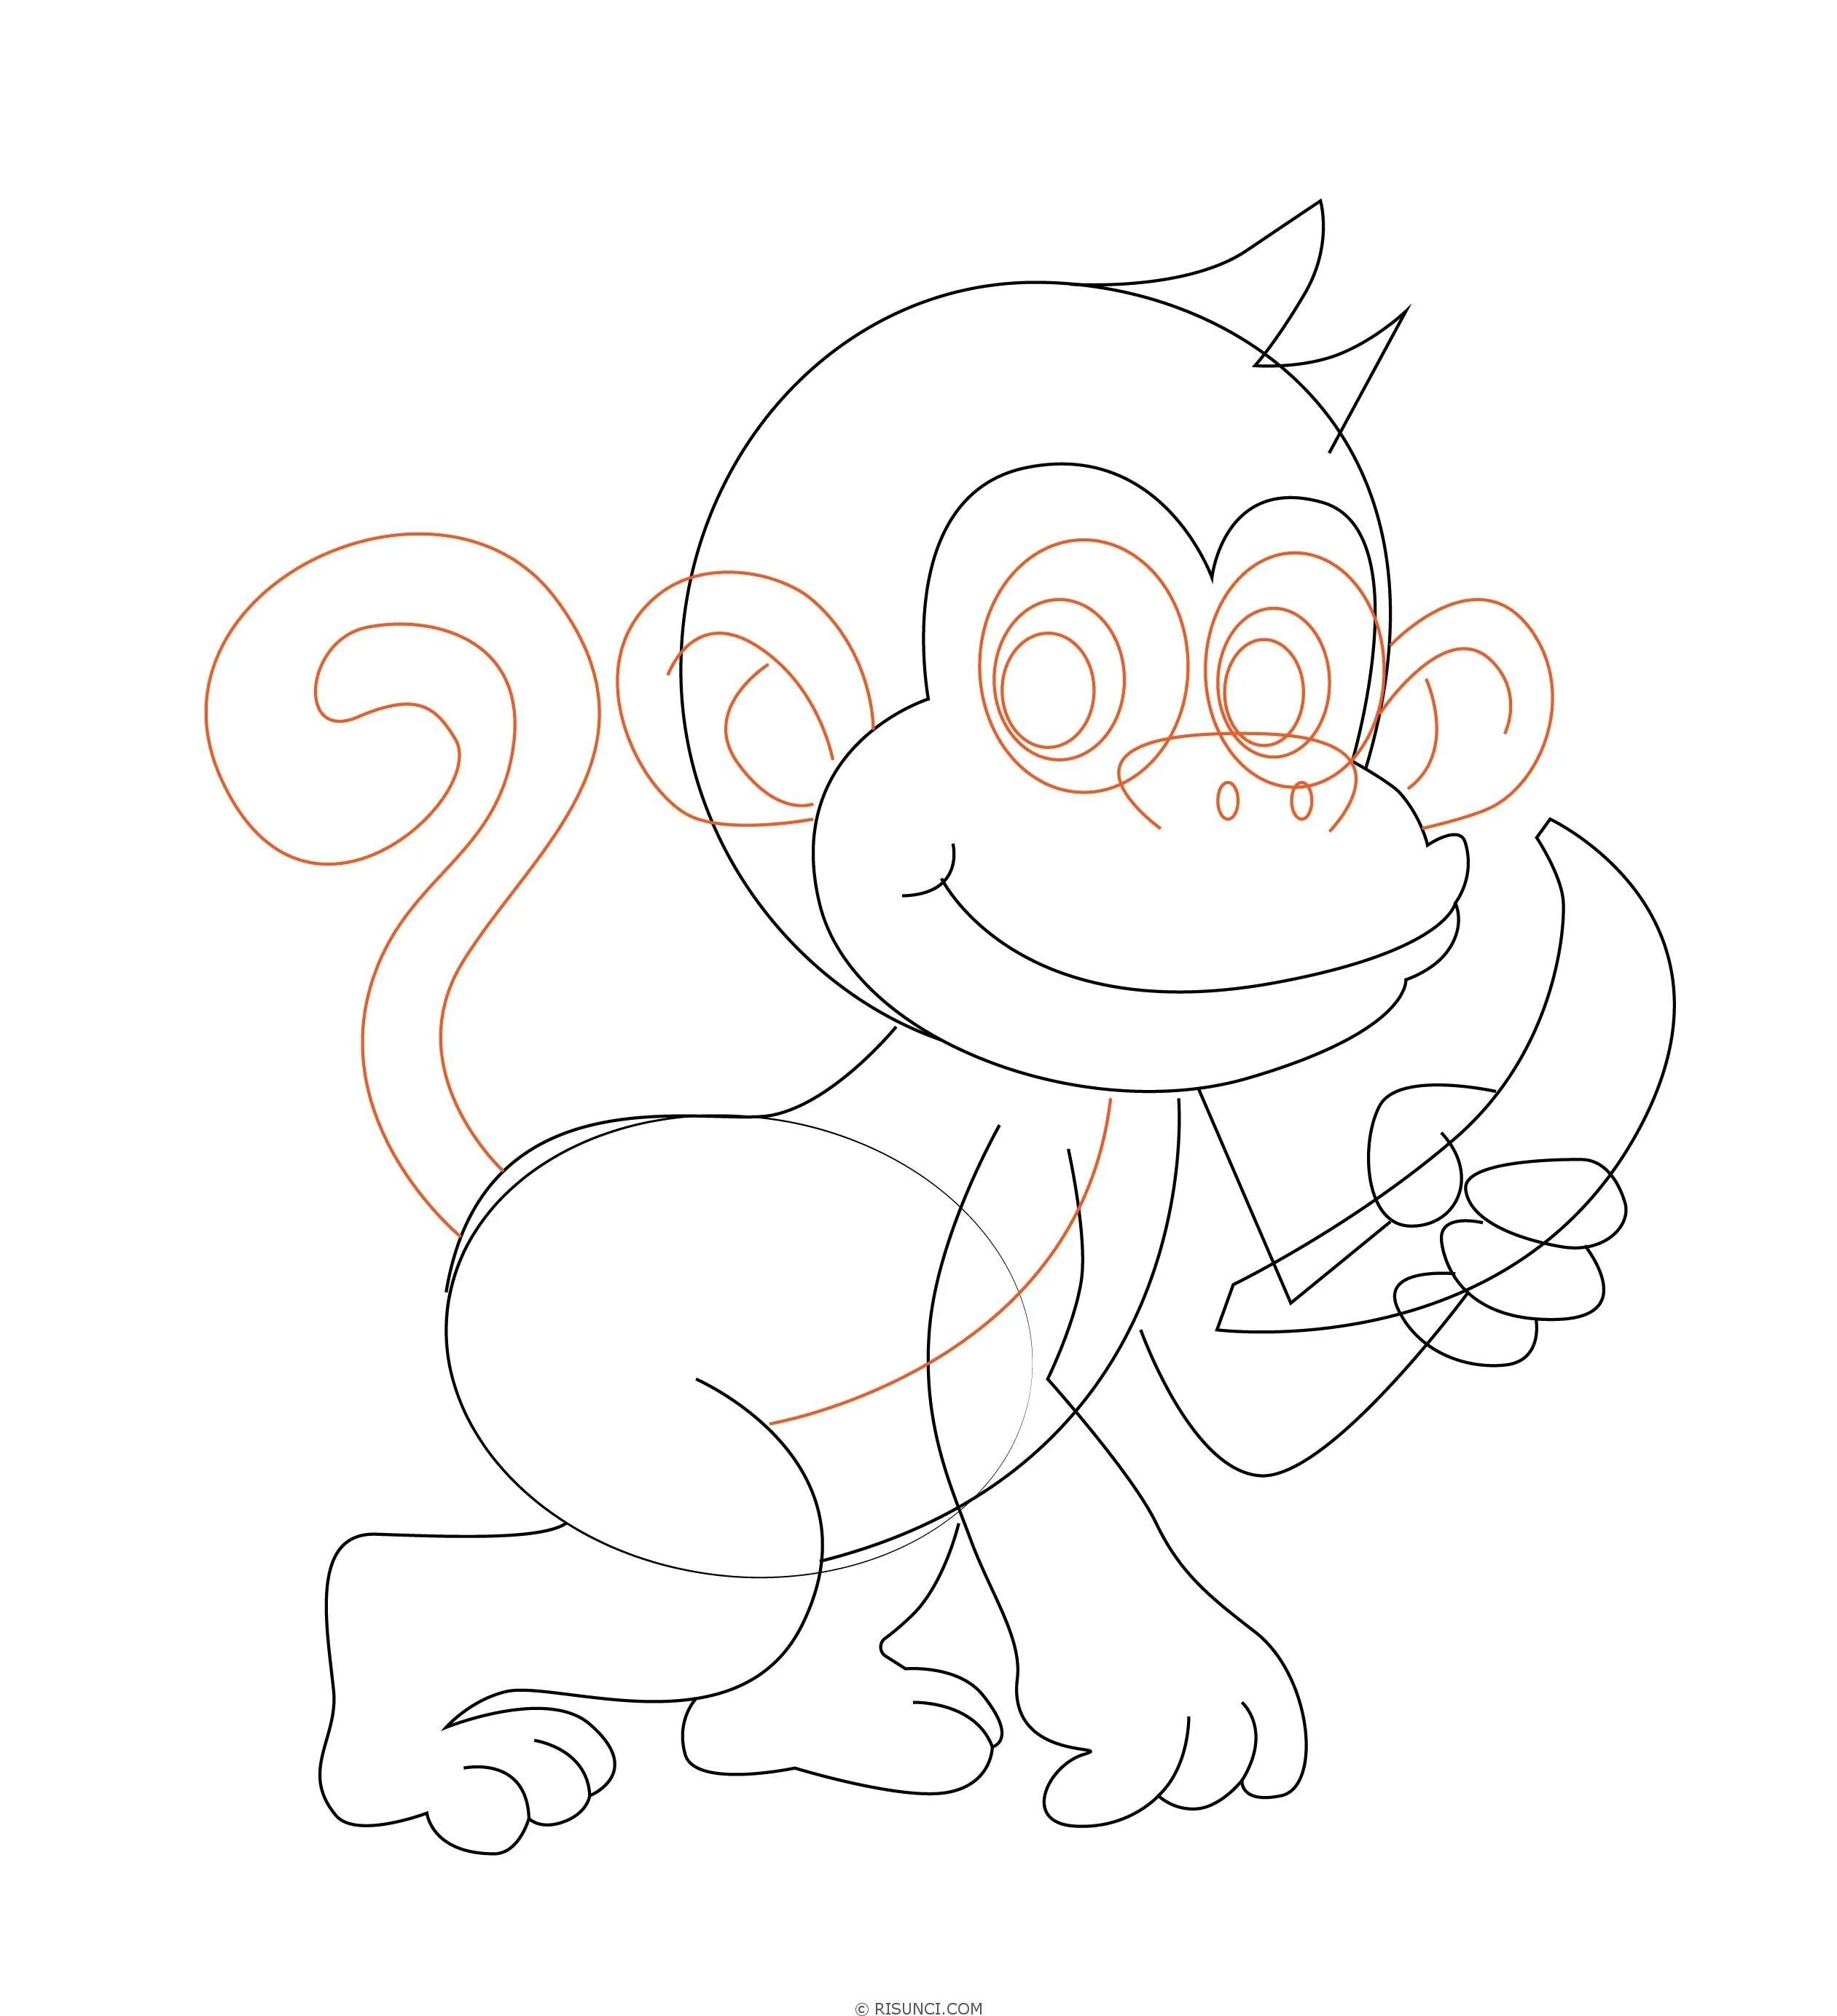 Рисунок обезьяны карандашом. Рисунки обезьянки для срисовки. Обезьянка рисунок карандашом. Обезьяна для срисовки. Нарисовать мартышку.